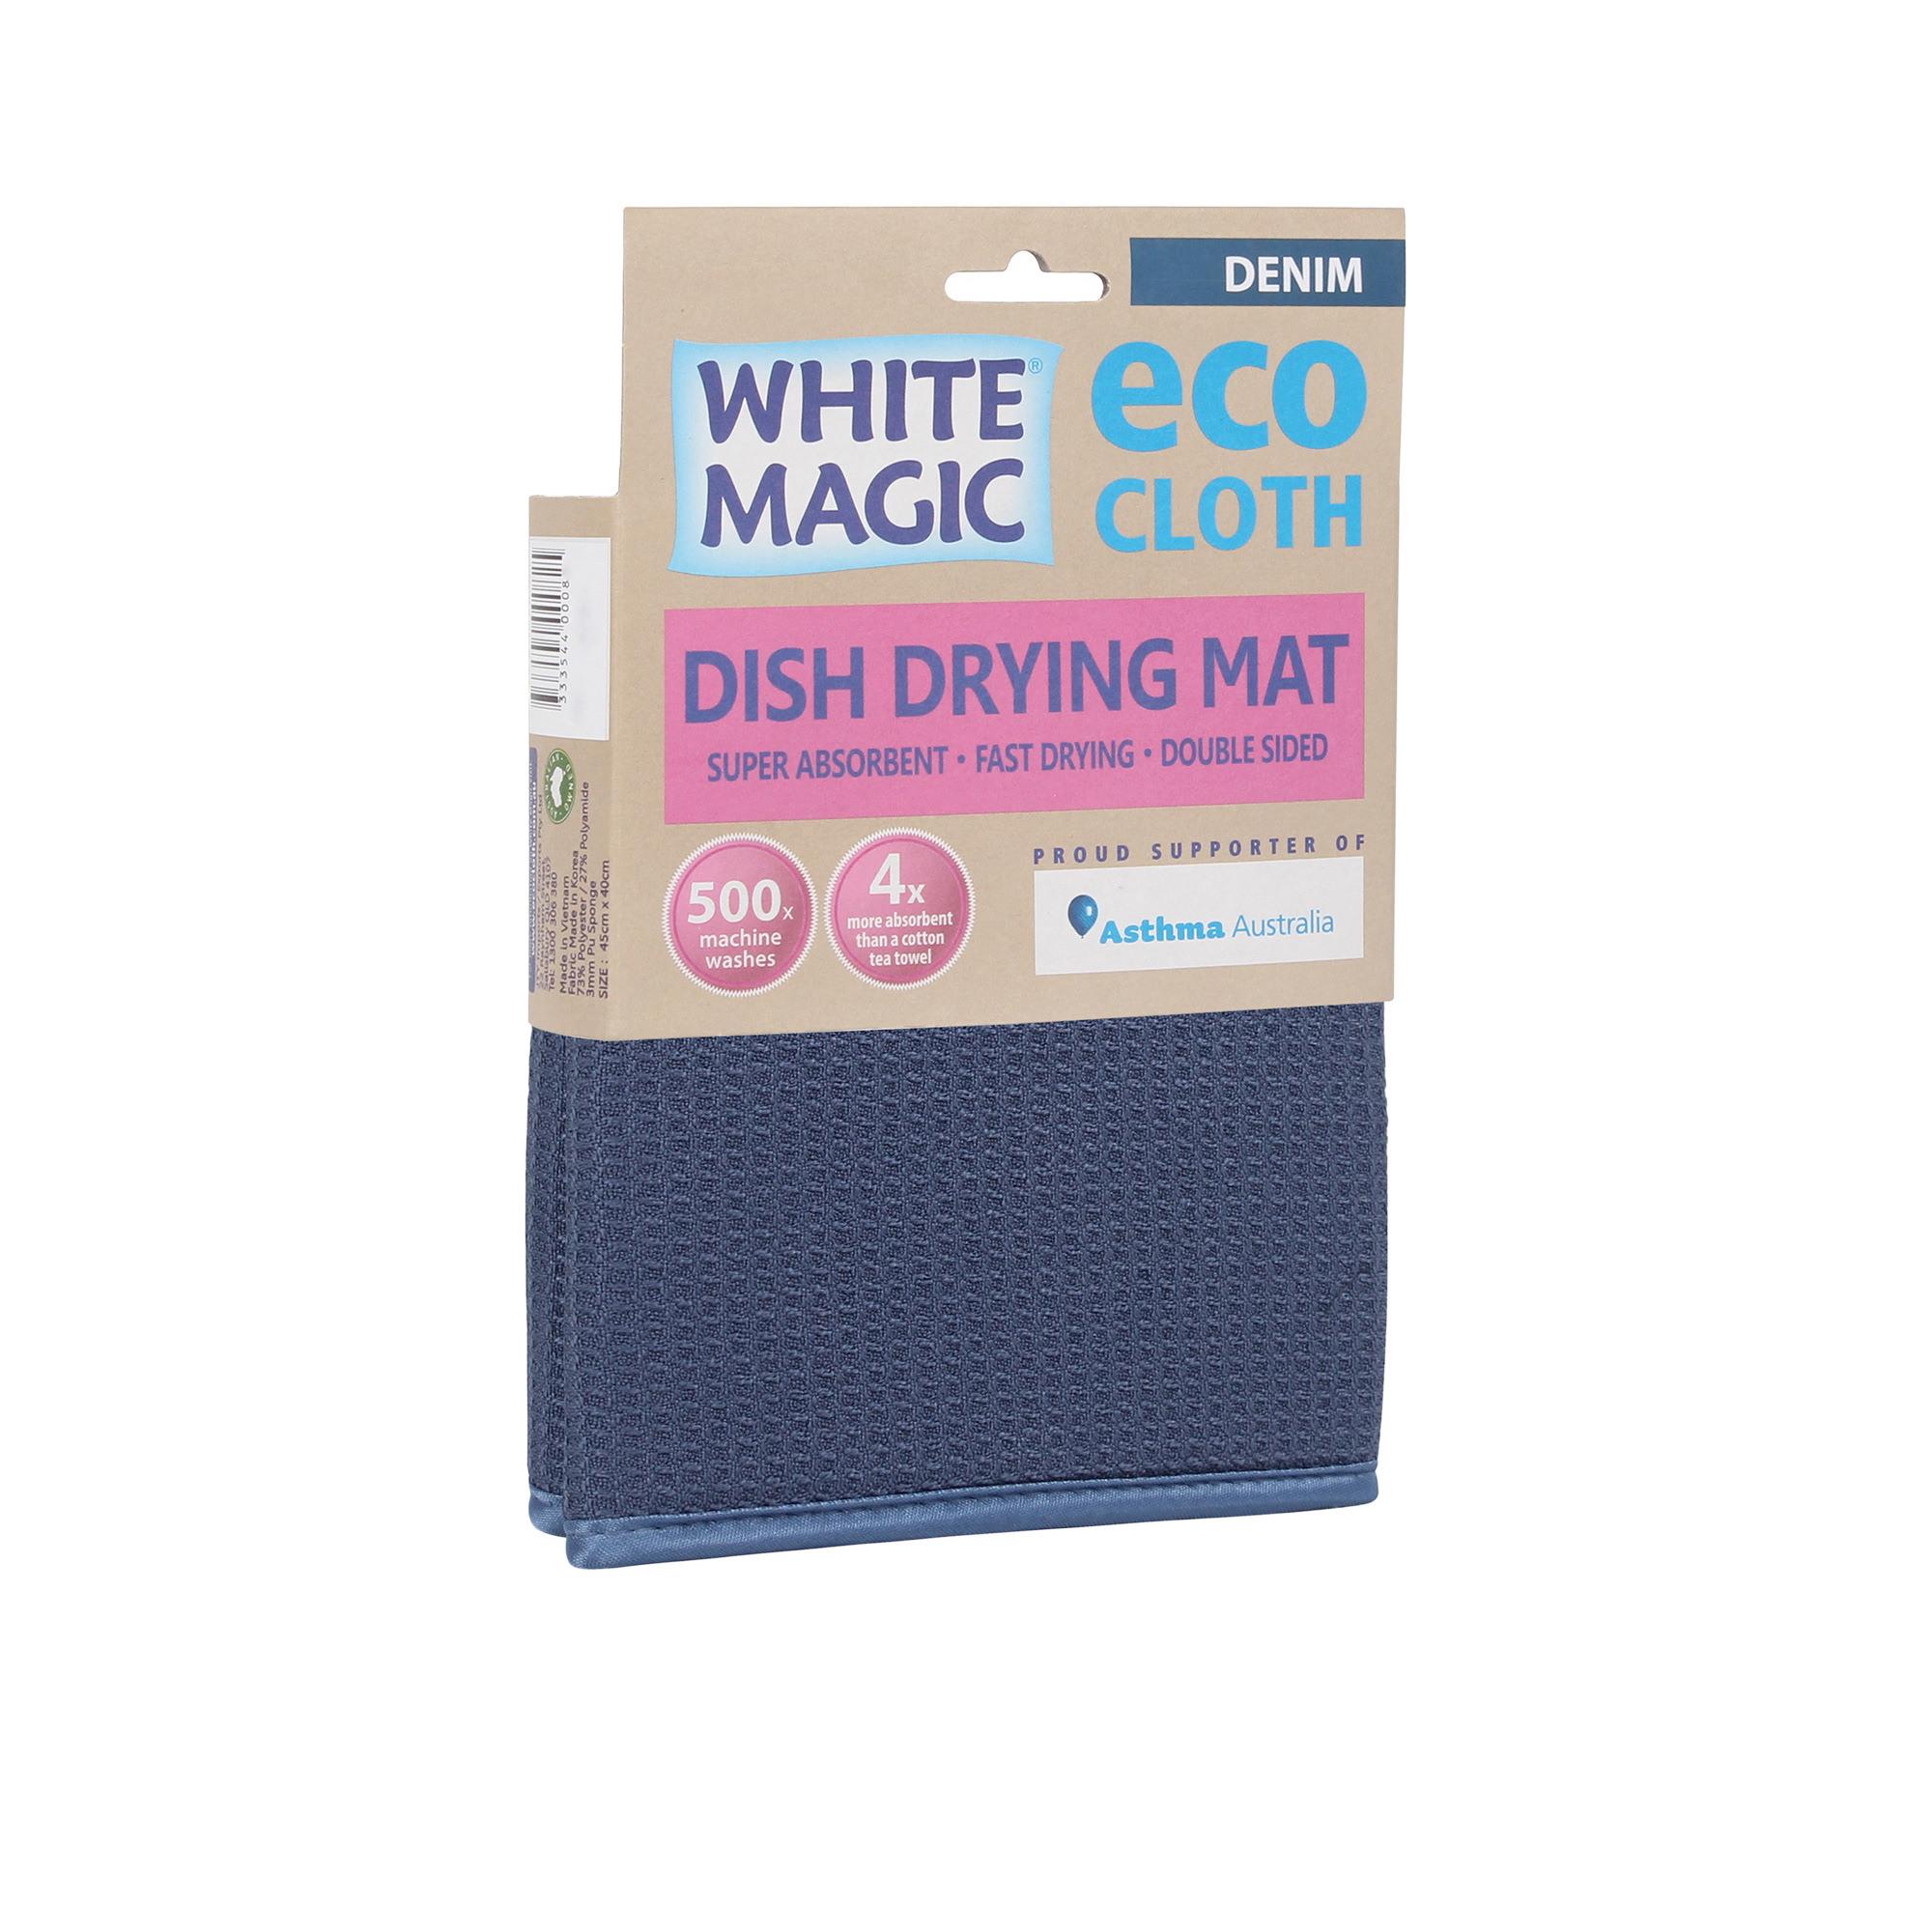 White Magic Eco Cloth Dish Drying Mat Denim Image 3